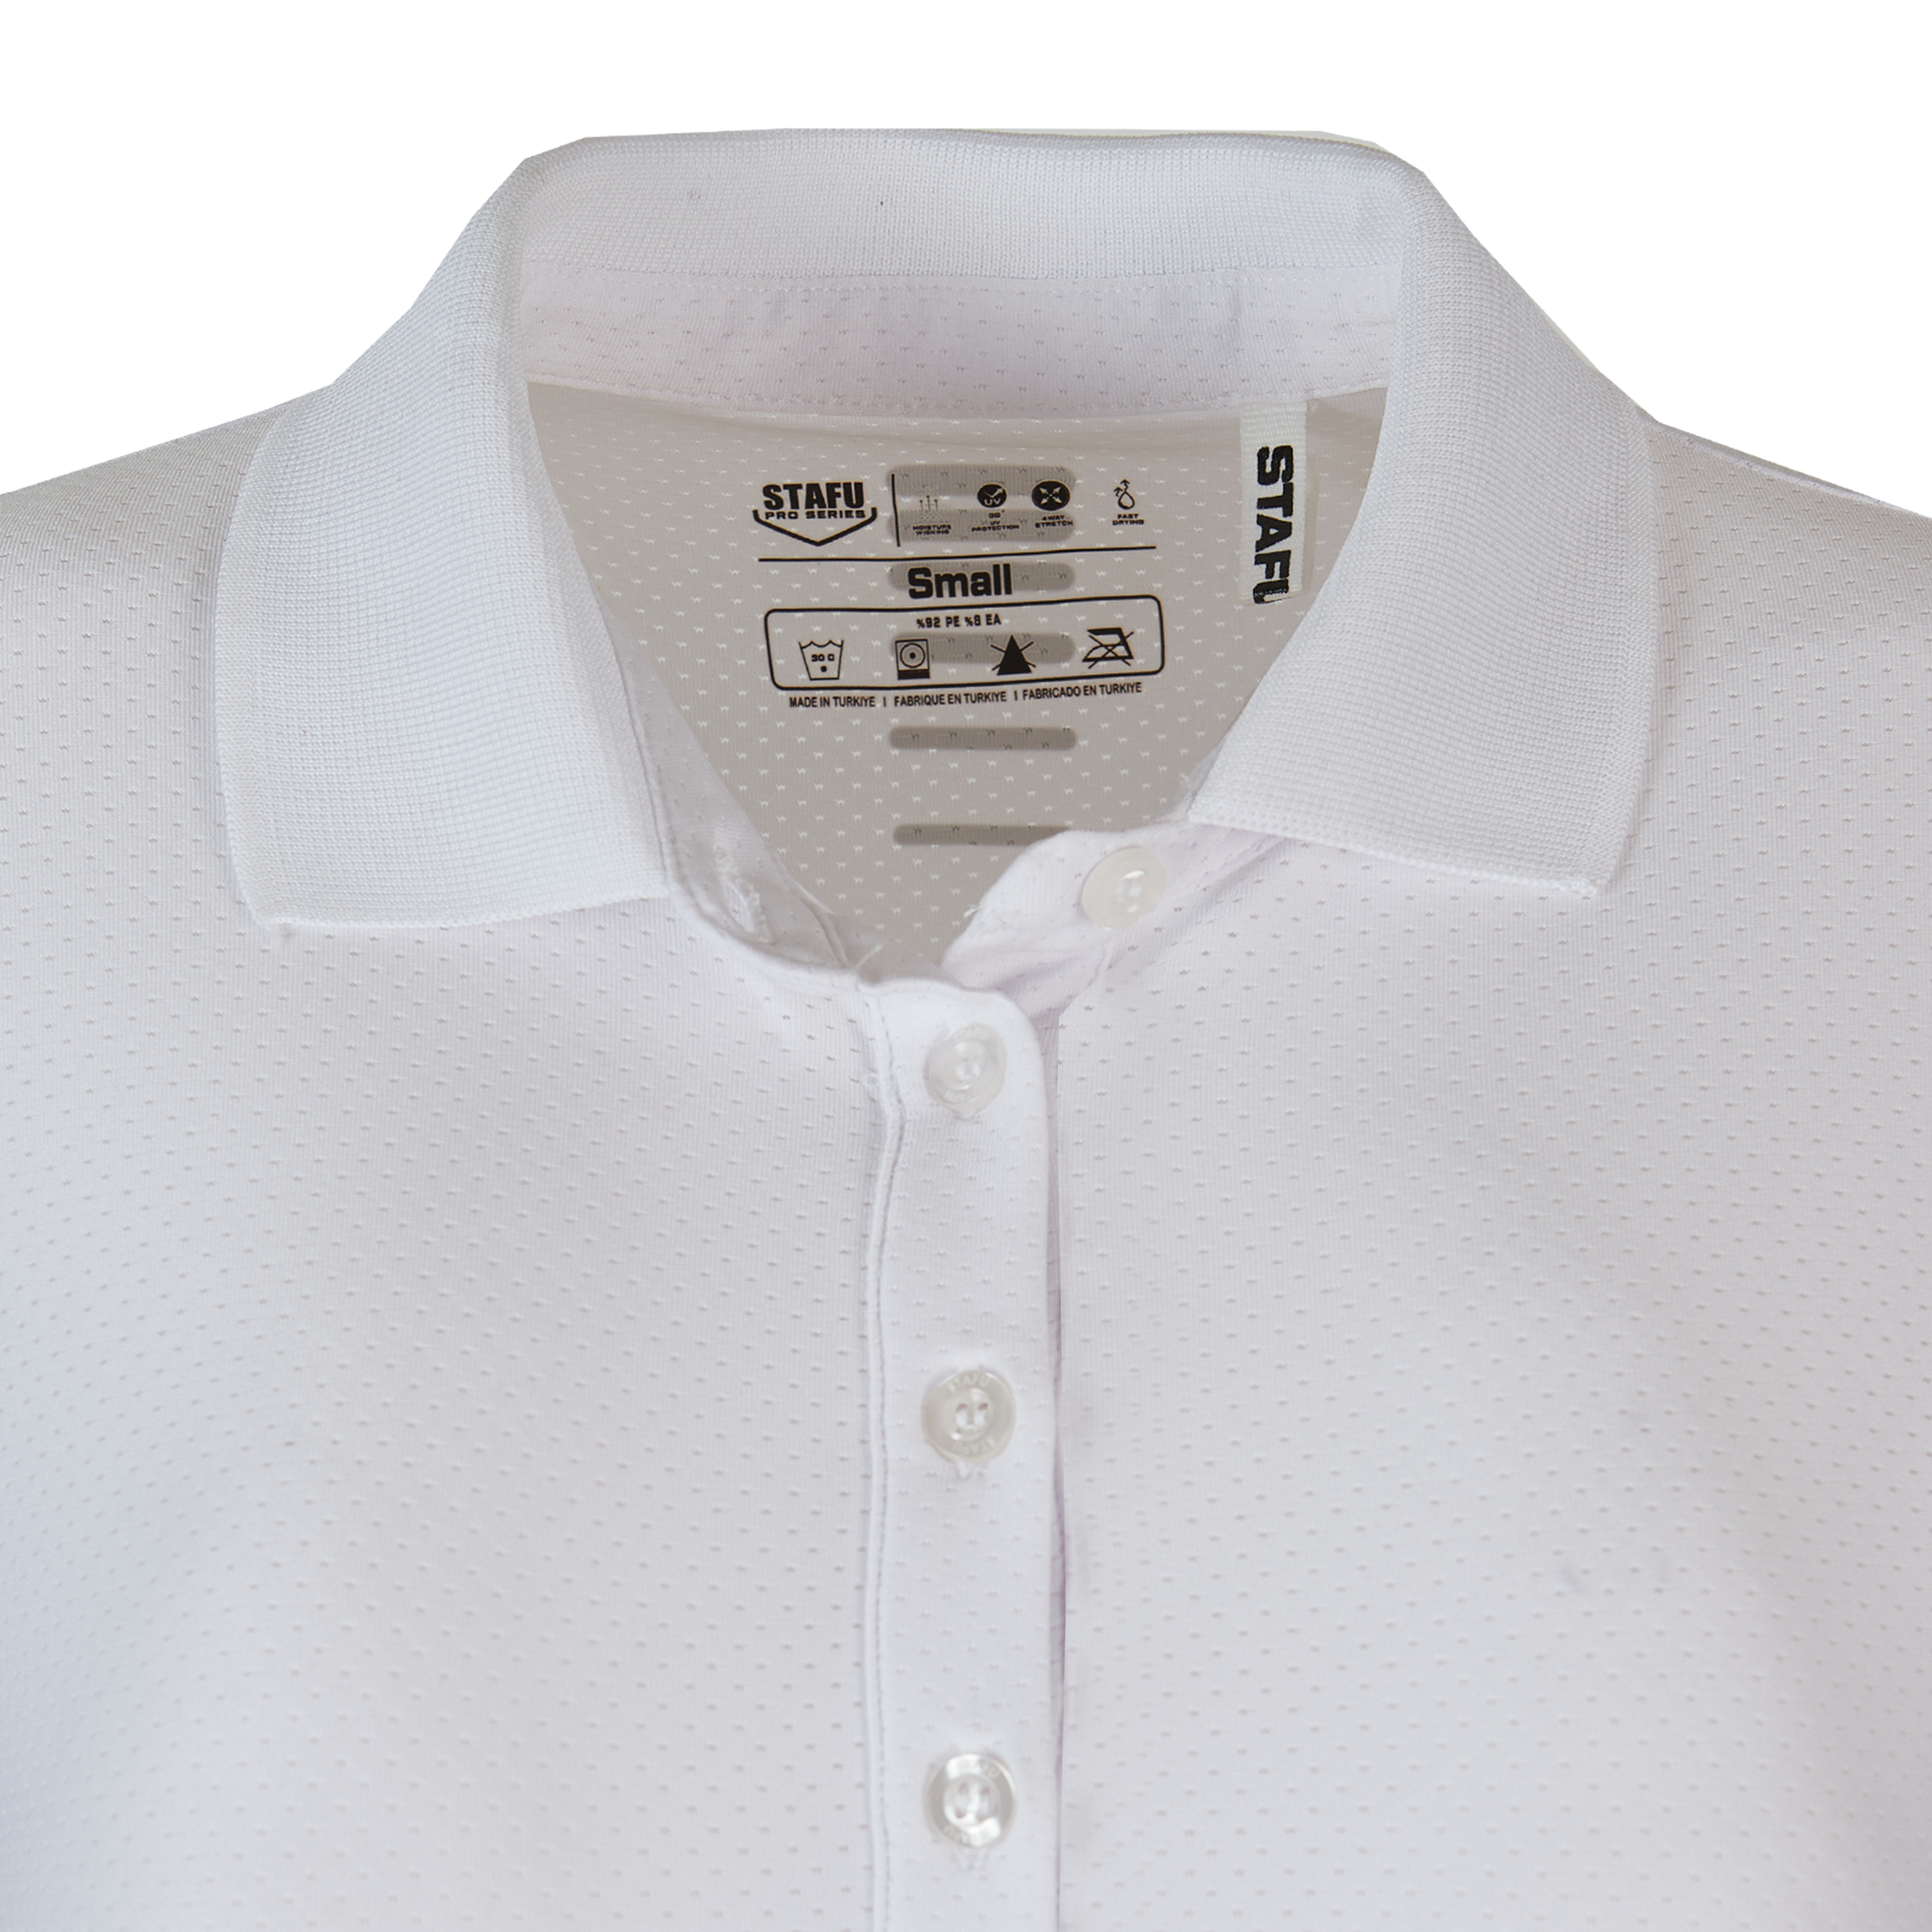 League Women Short Sleeve Polo Neck Shirt - White